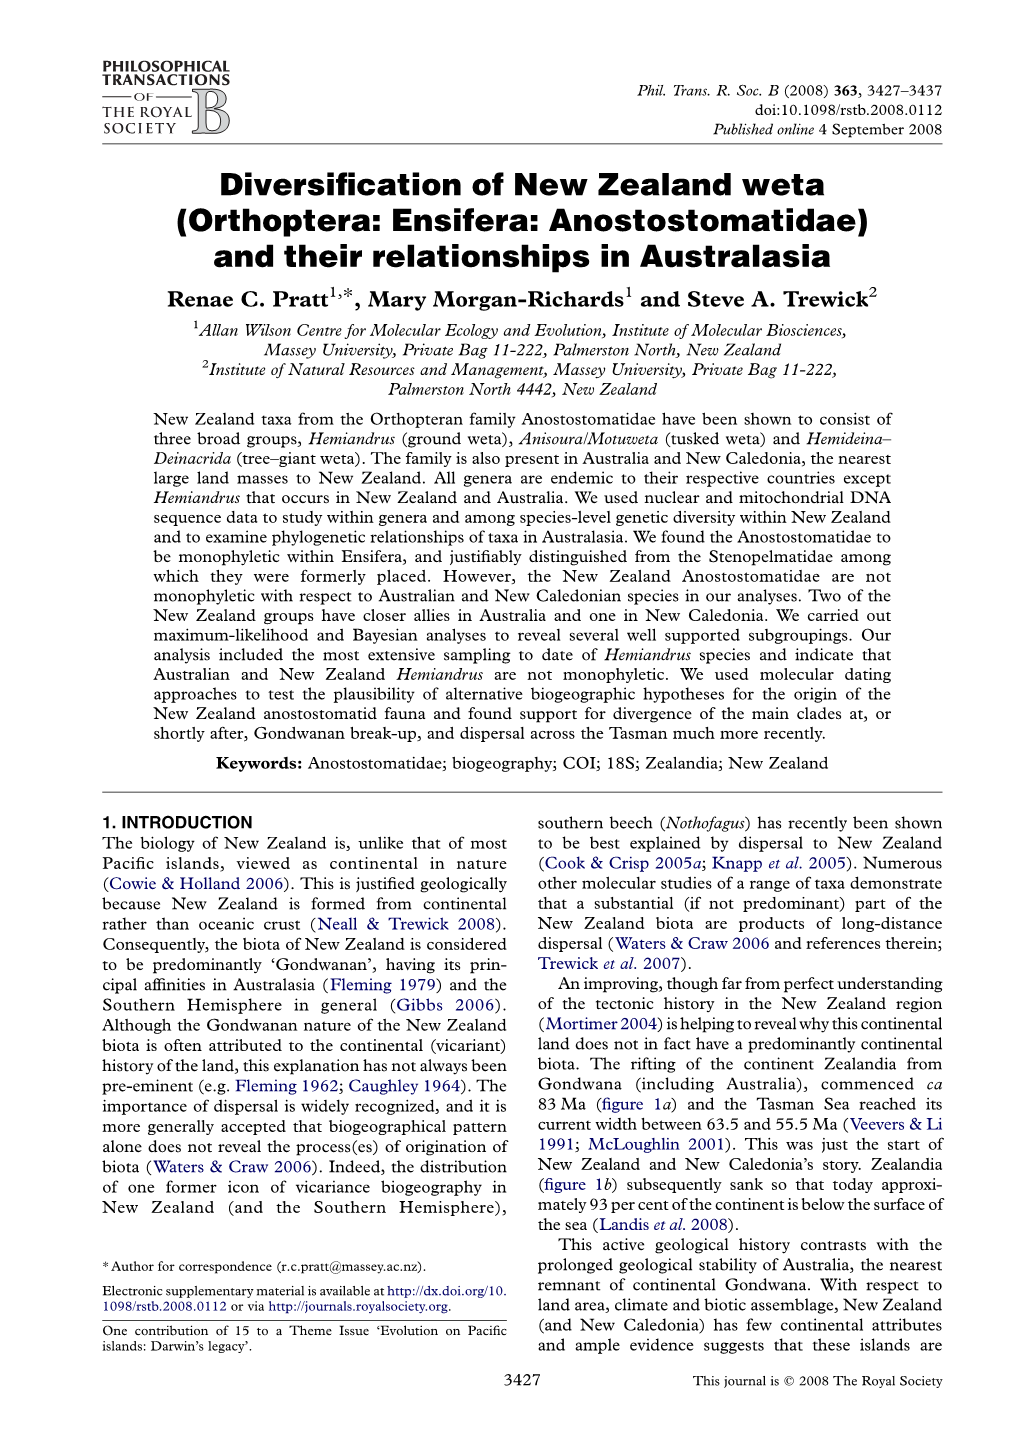 Diversification of New Zealand Weta (Orthoptera: Ensifera